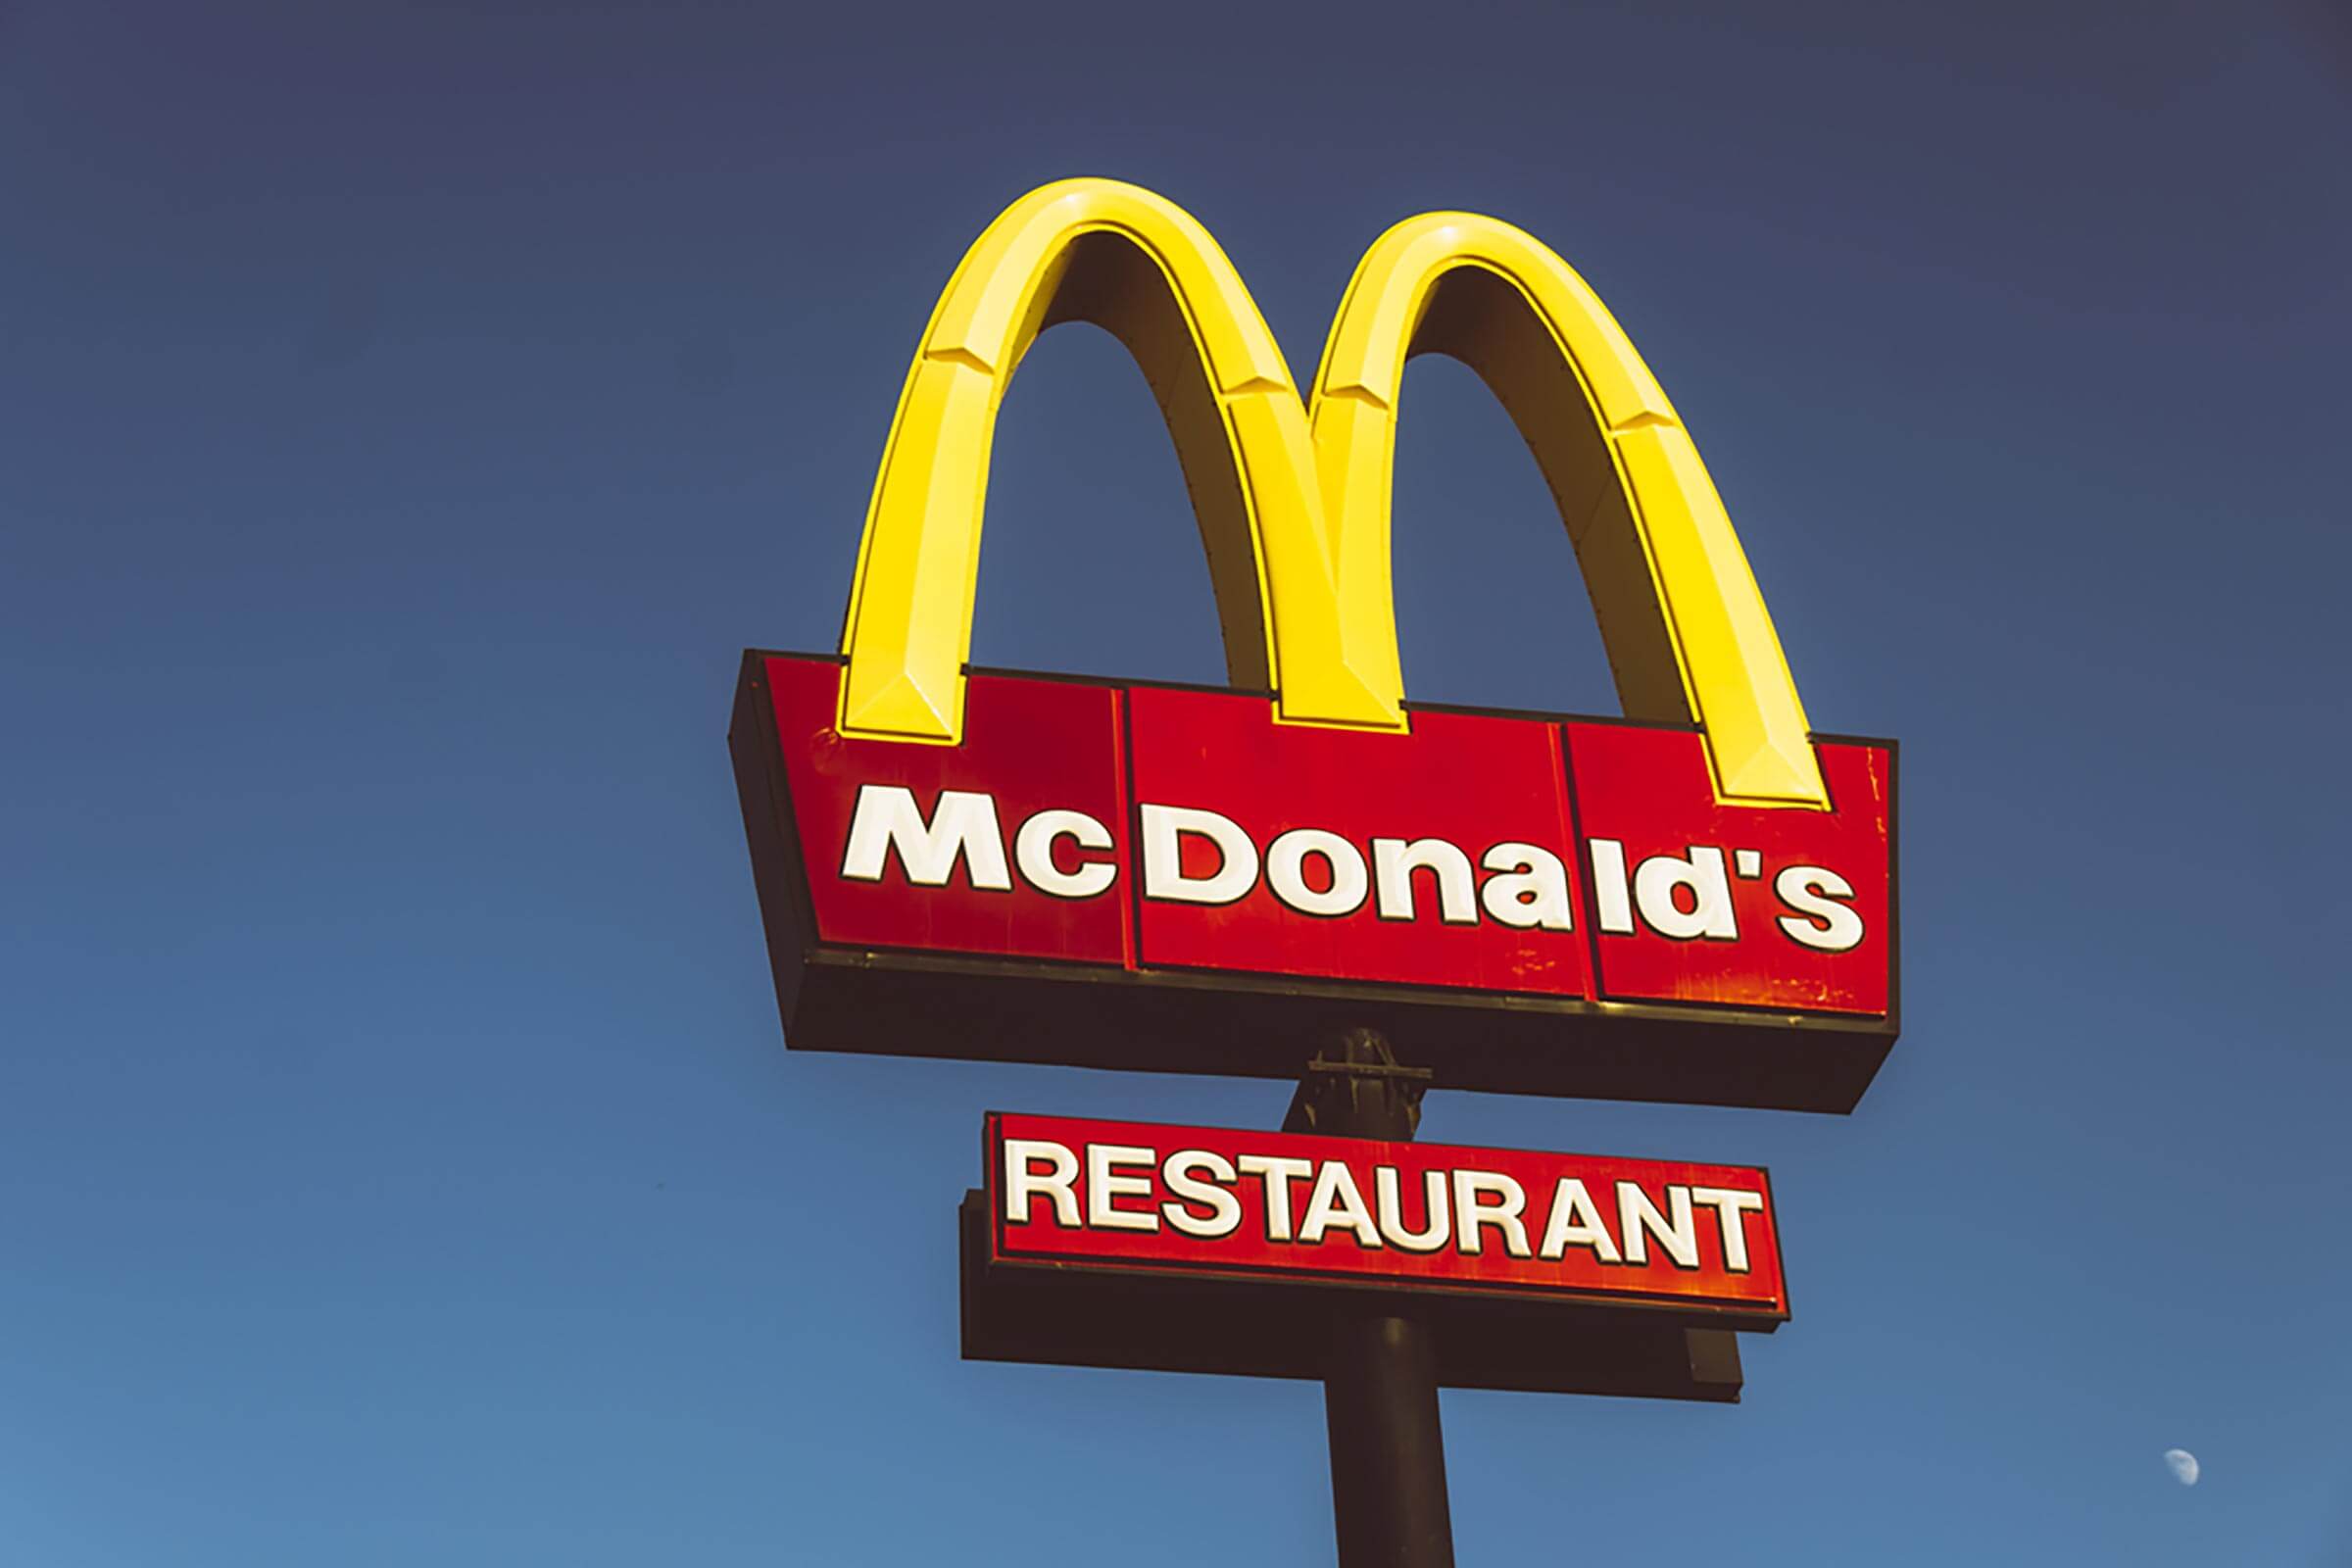 McDonald's Word Logo - The Scandalous Hidden Meaning Behind McDonald's Golden Arches